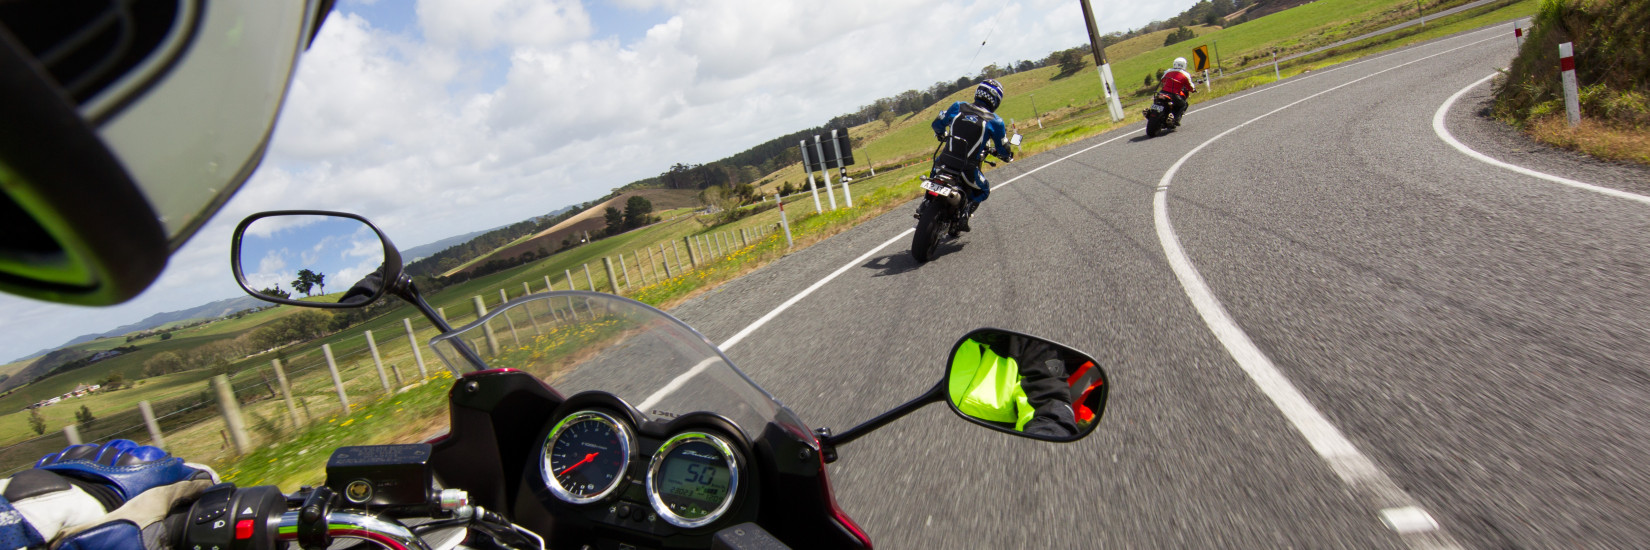 Motorcyclist point of view, riding around corner